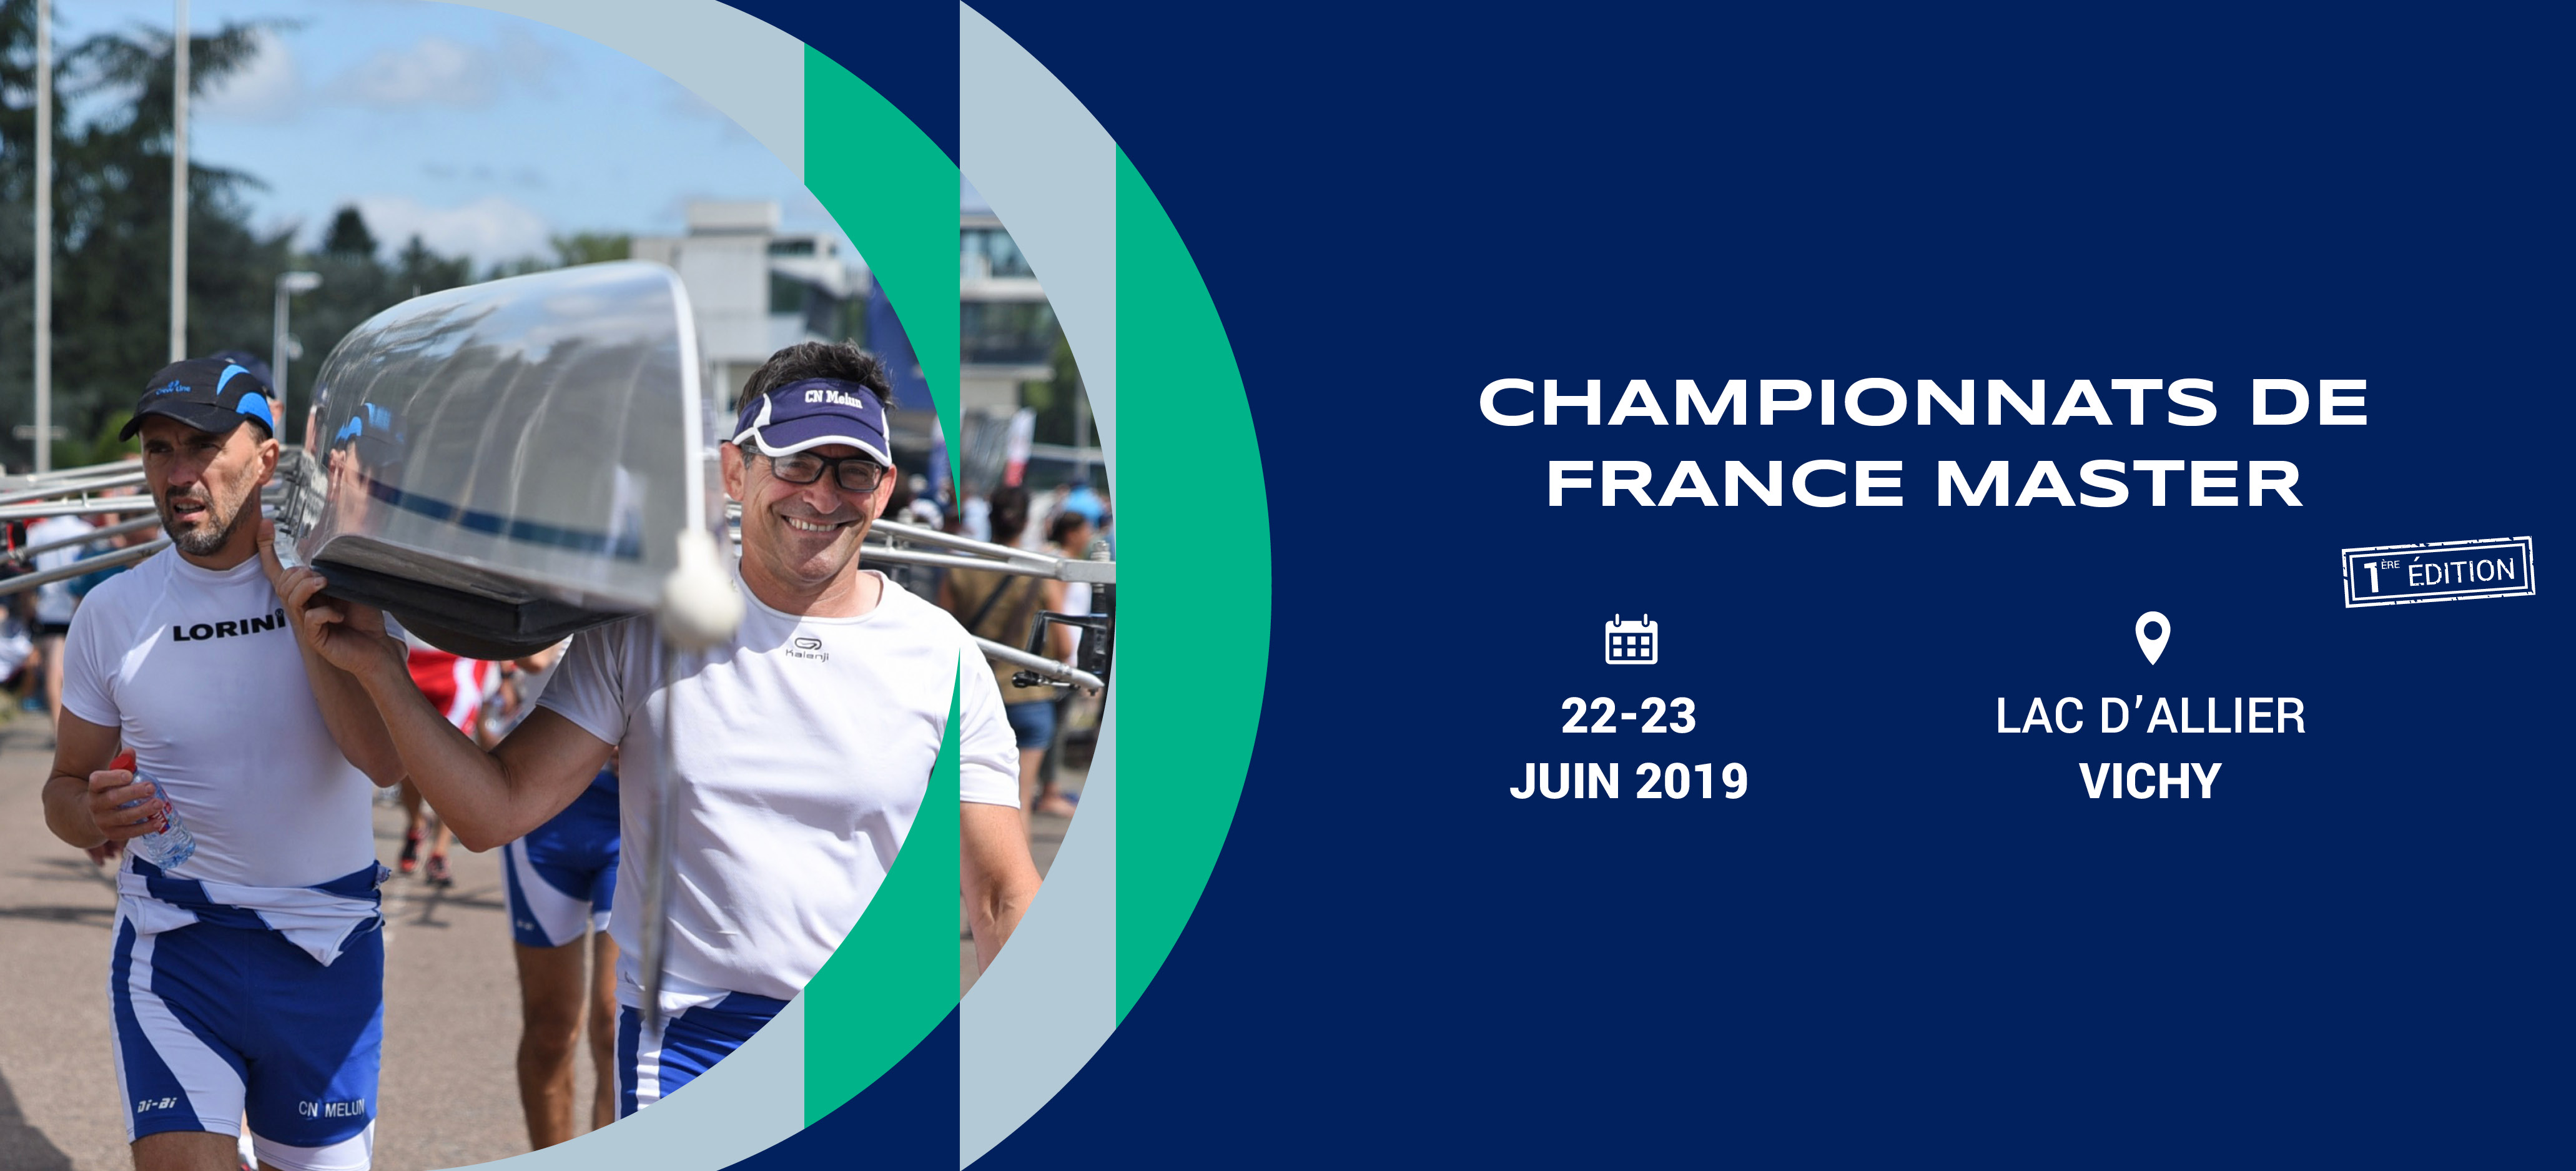 Championnat de France Master 2019